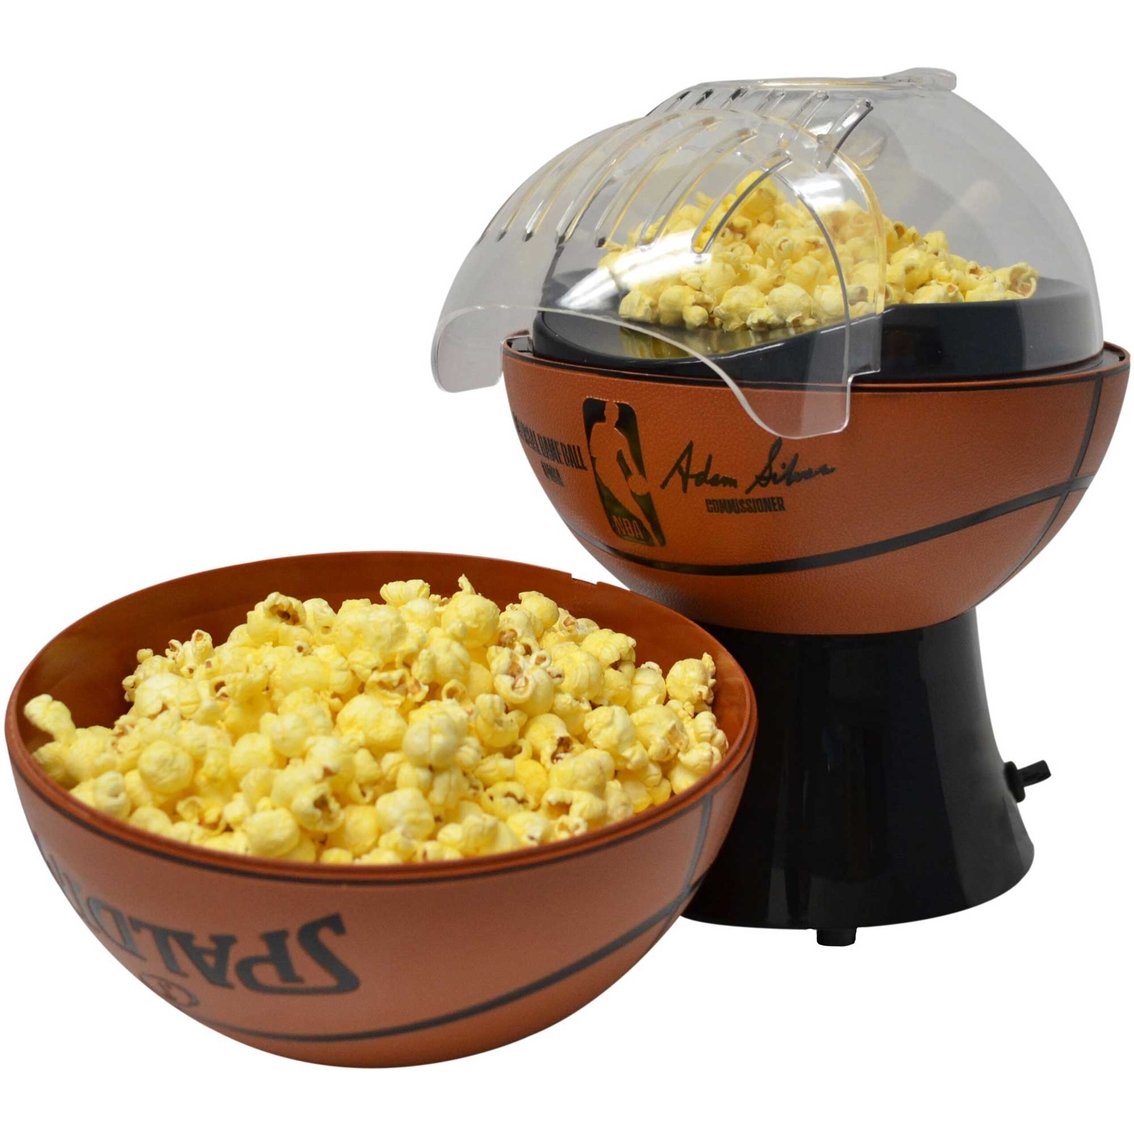 NBA Popcorn Maker - Officially Licensed Basketball Hot Air Popcorn